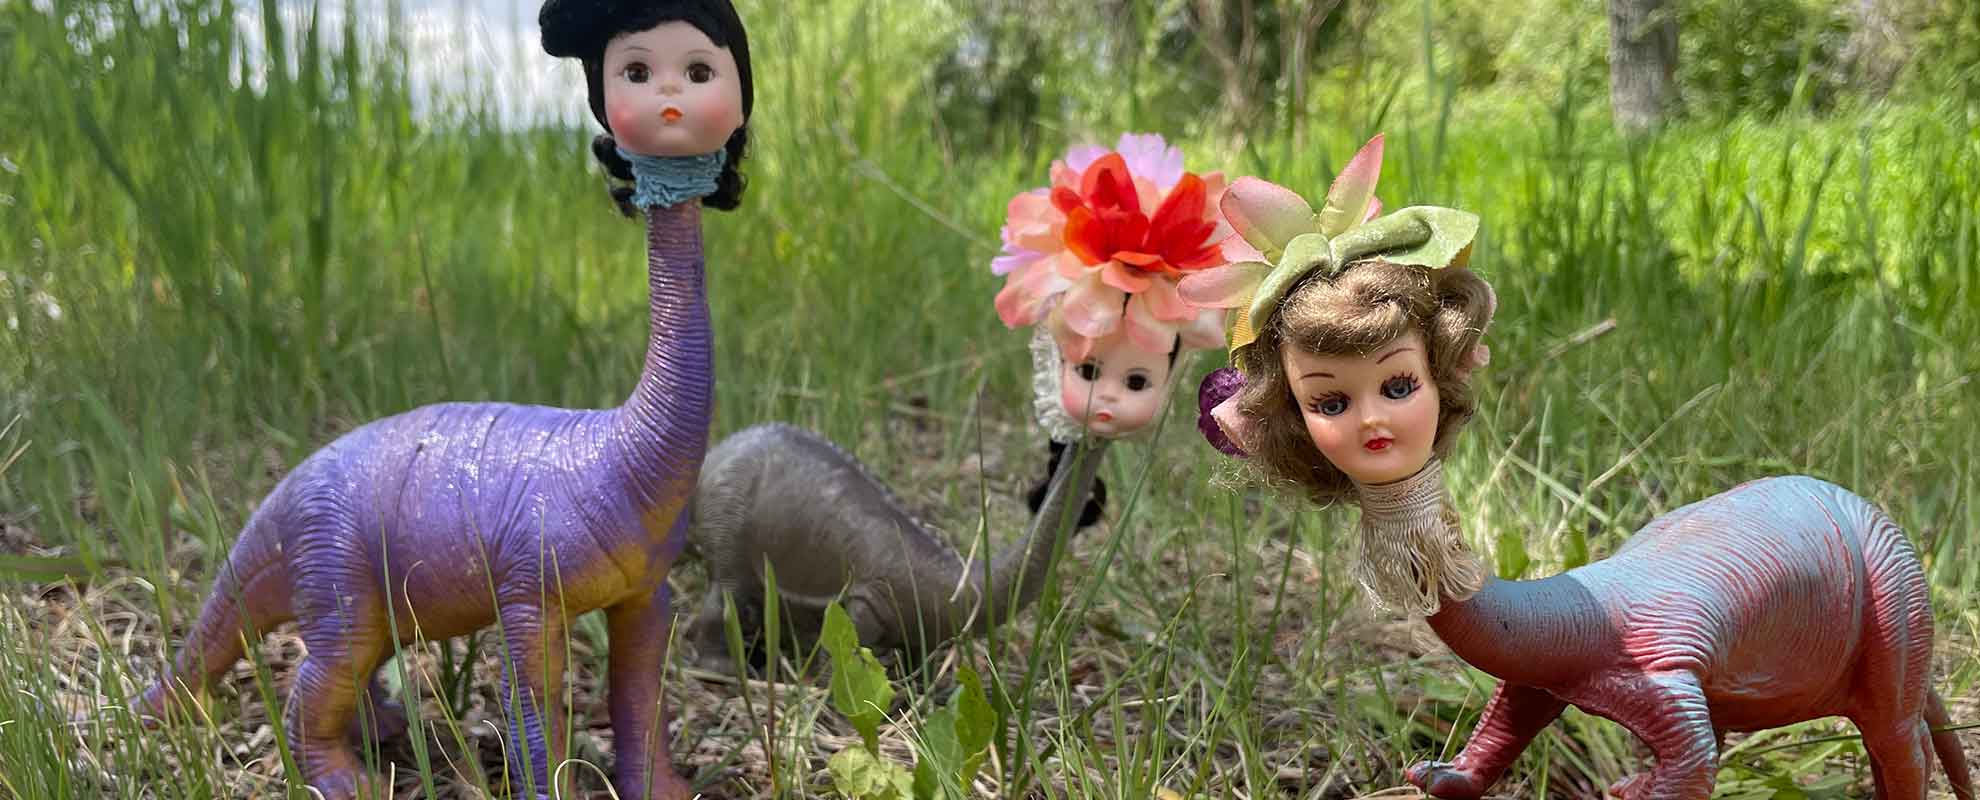 Three dinosaur dolls with brontosaurus bodies and human doll heads